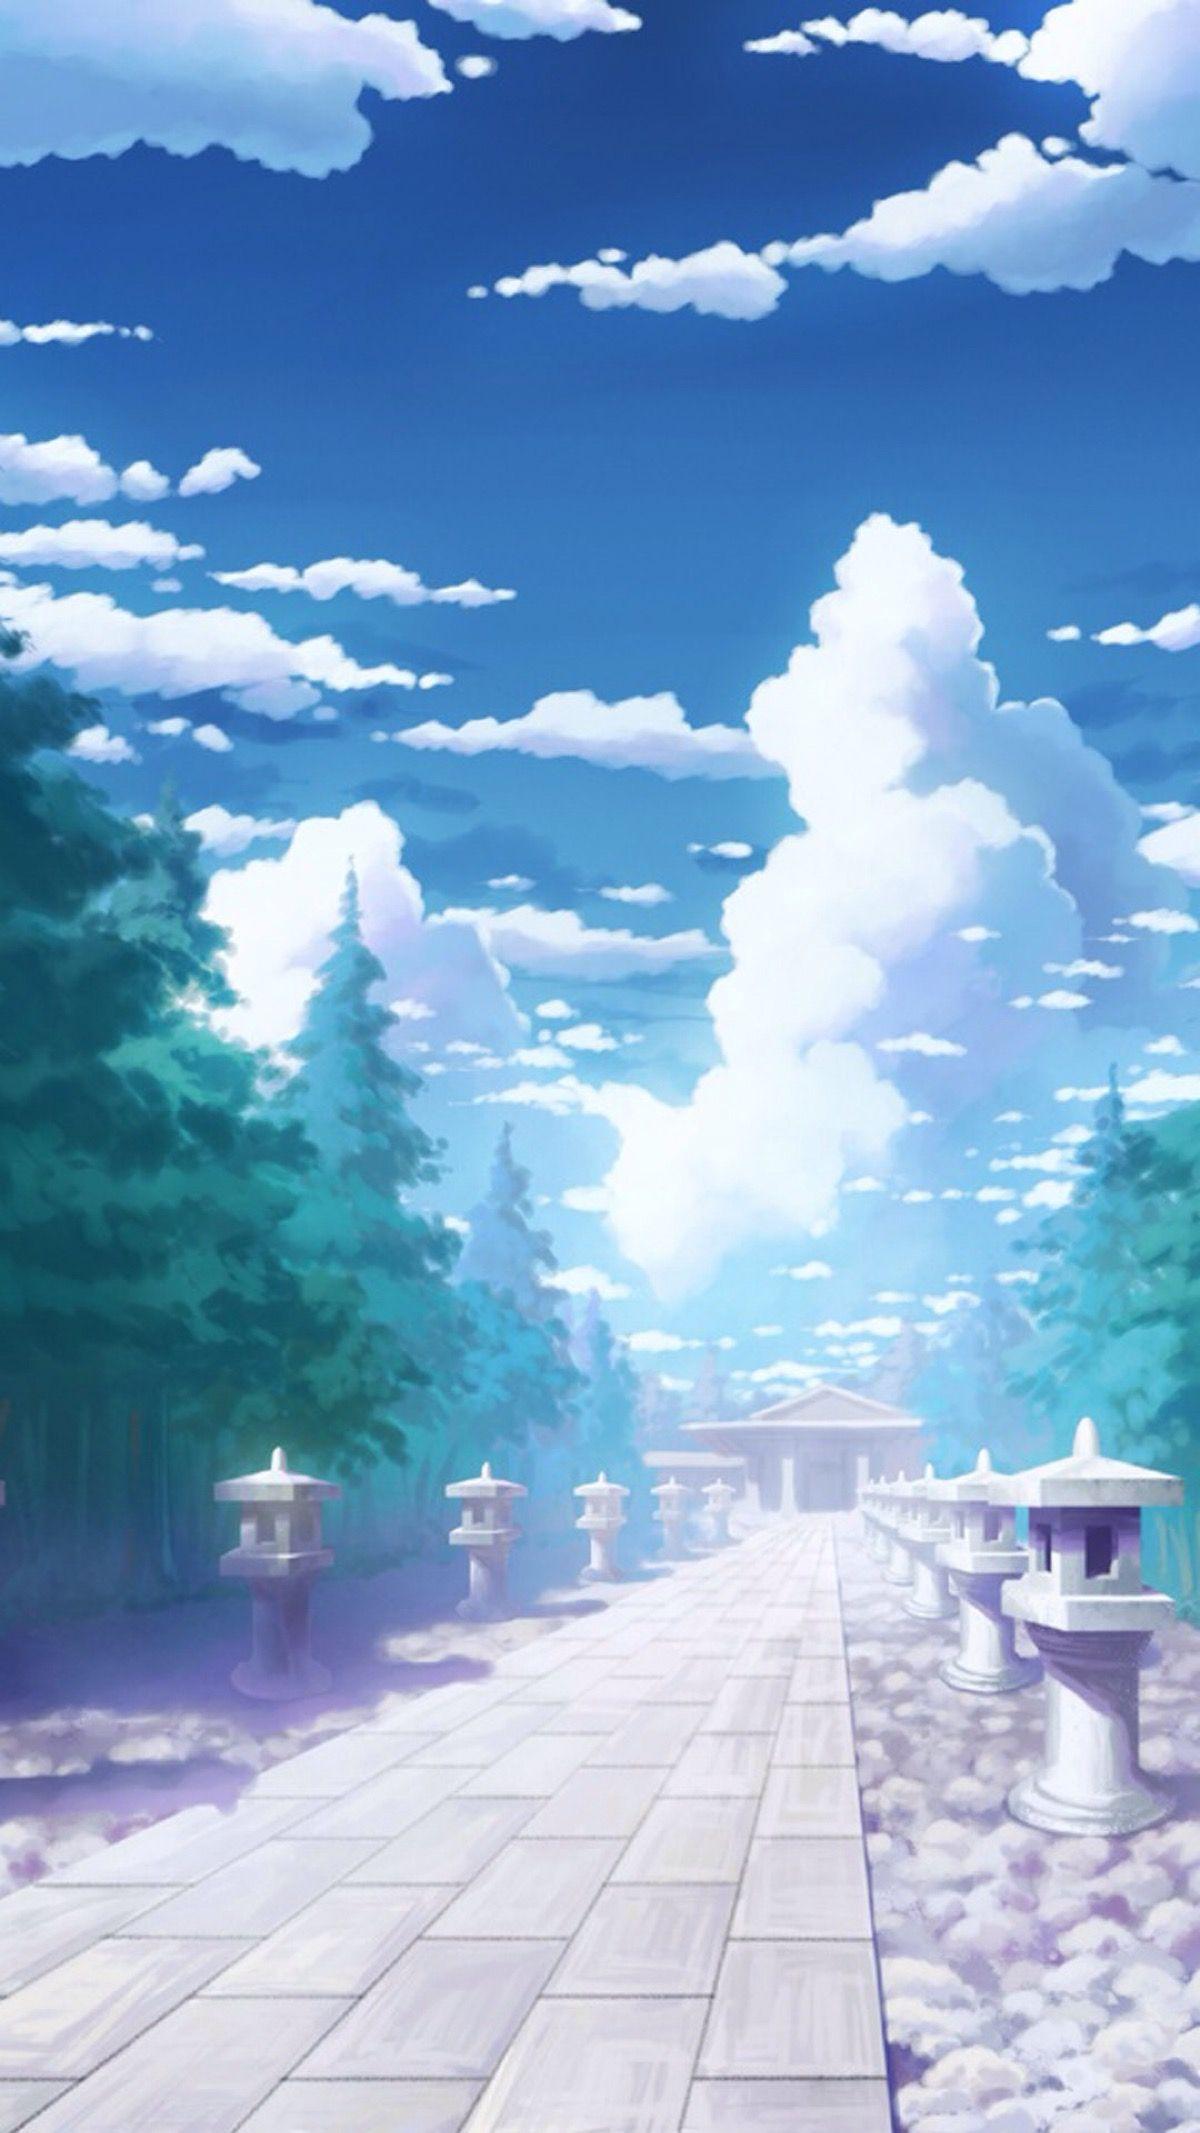 Anime Landscape Phone Wallpaper Free Anime Landscape